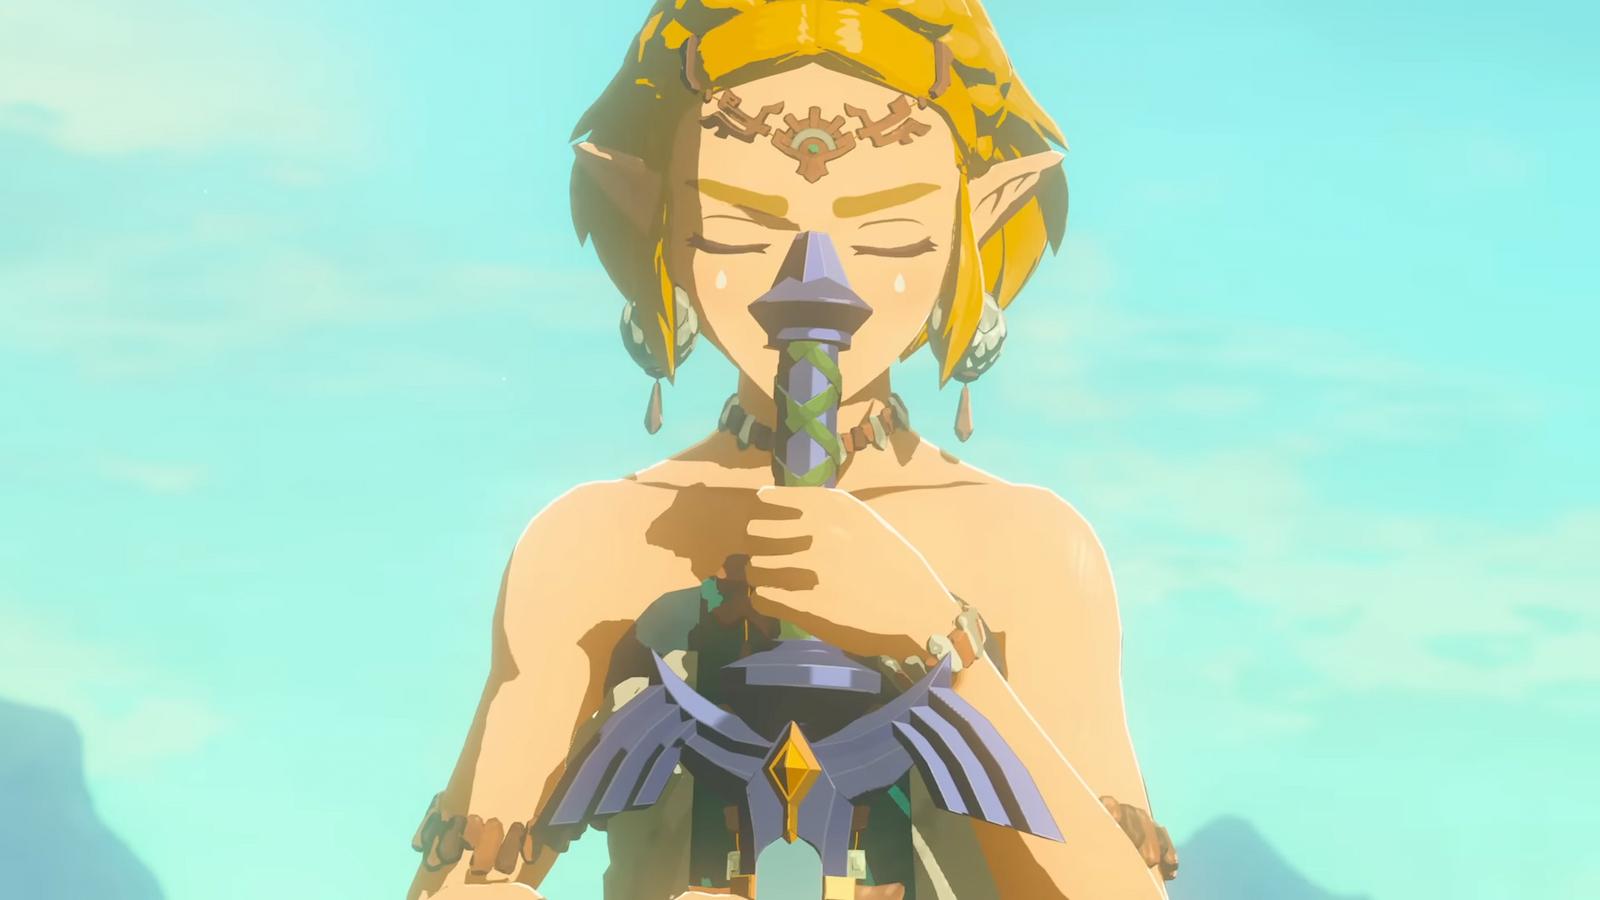 Zelda holding the Master Sword in Tears of the Kingdom